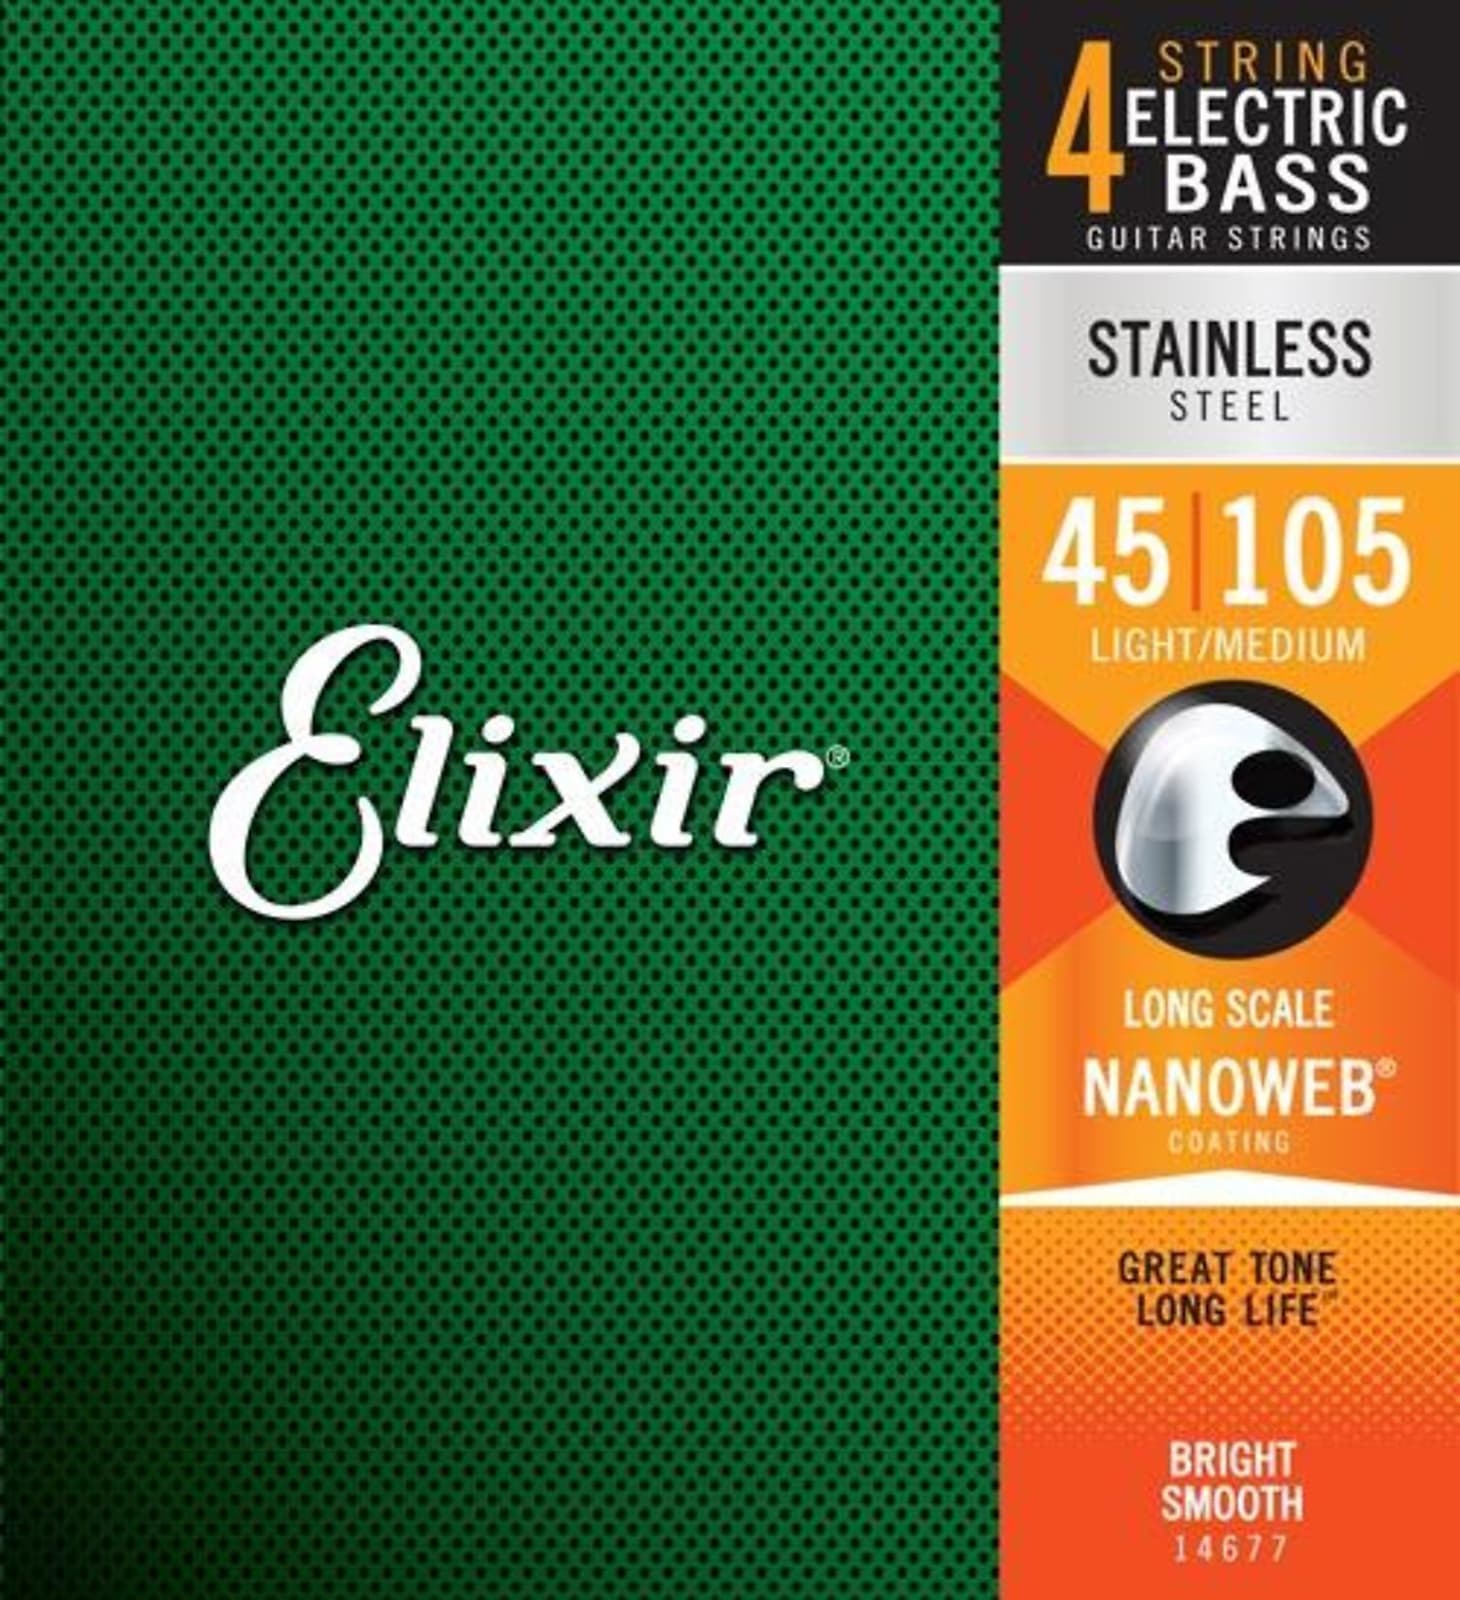 Elixir Strings 14677 E Bass S.Steel w/NANOWEB Coating, Light/Medium